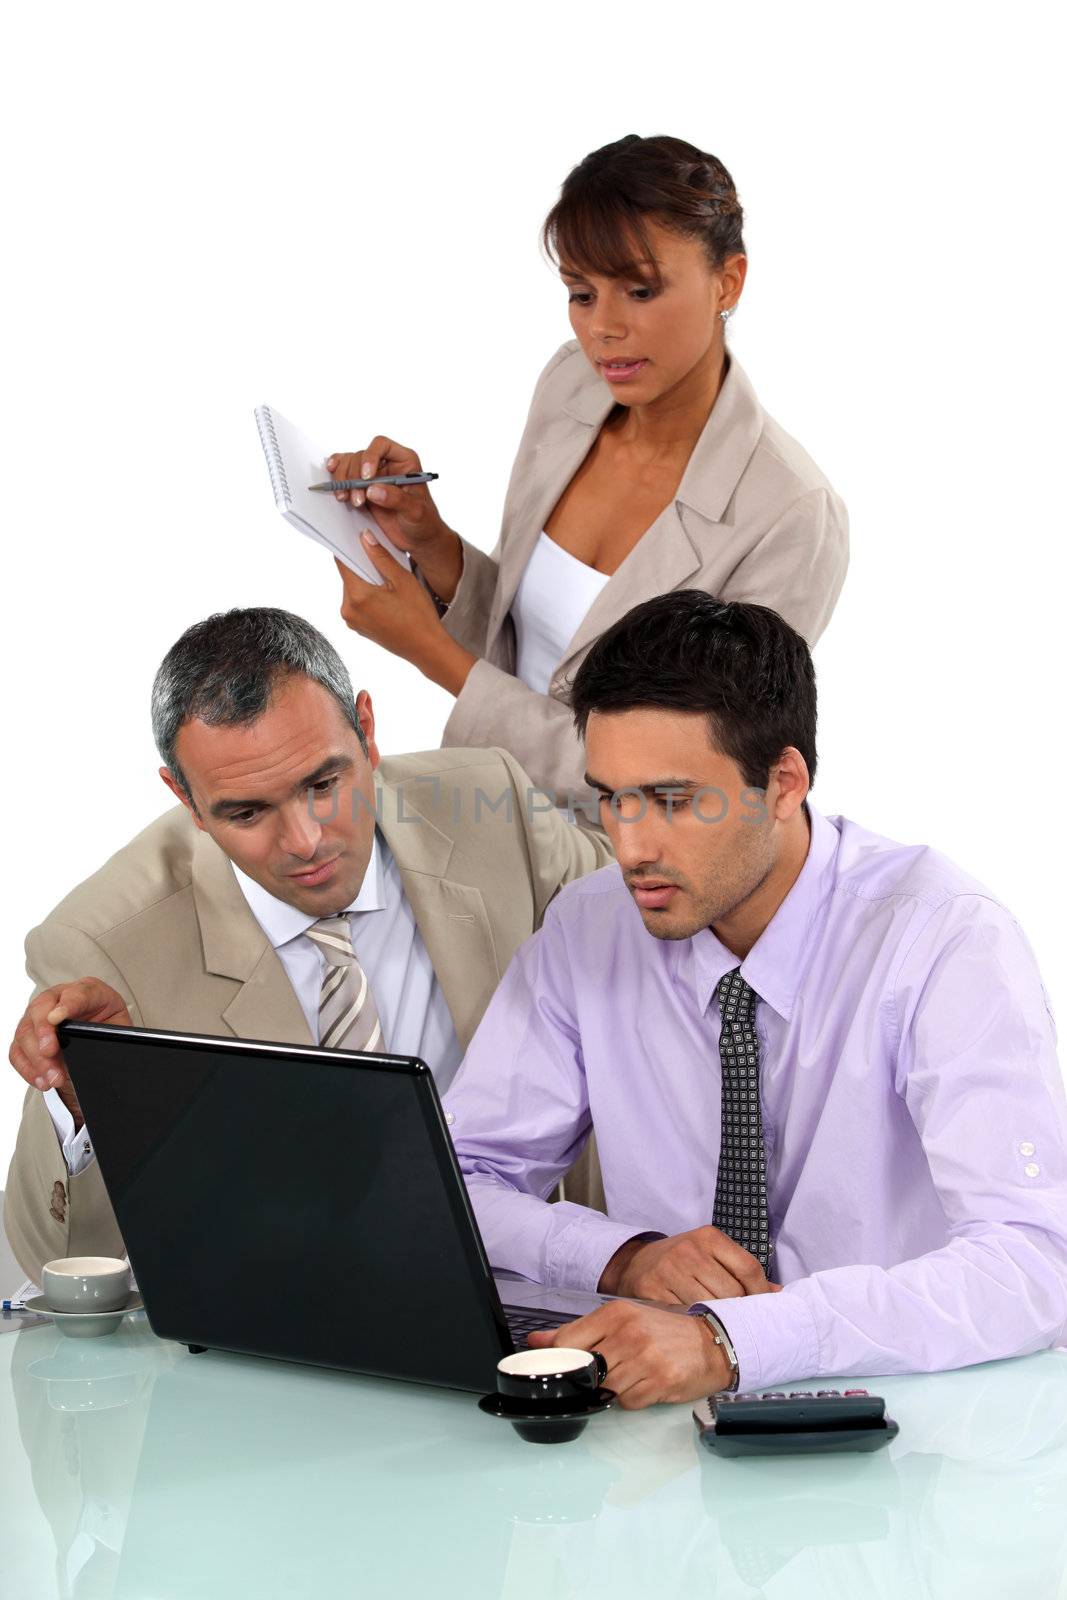 Sales team working on laptop by phovoir